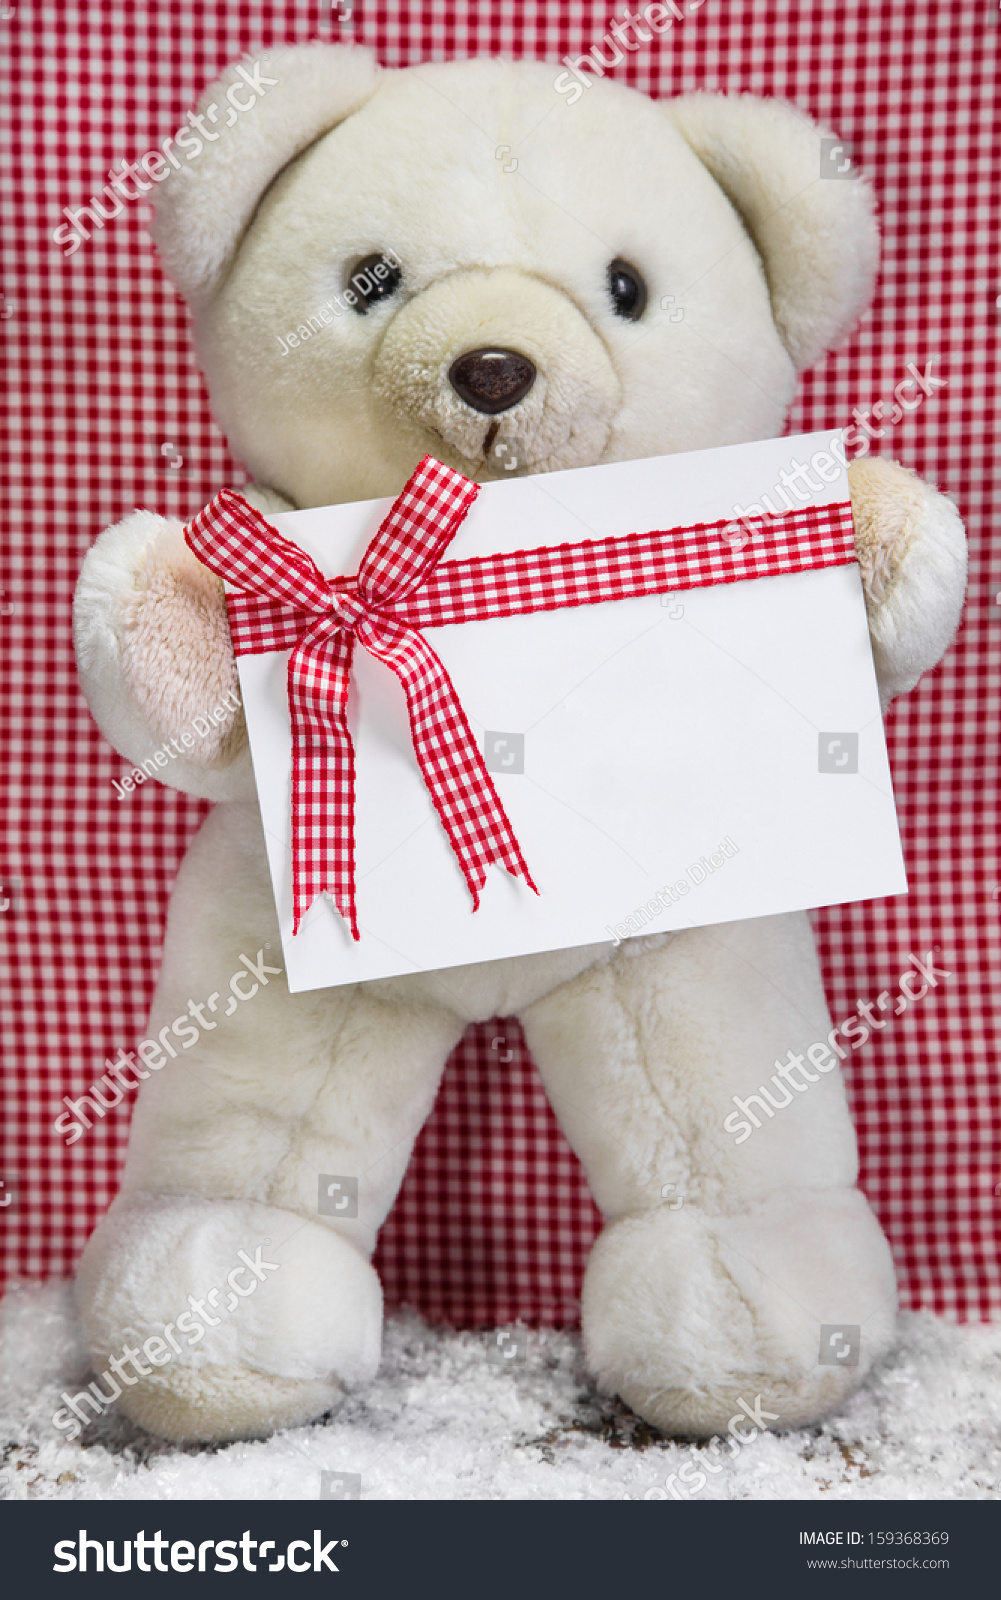 teddy bear holding gift box